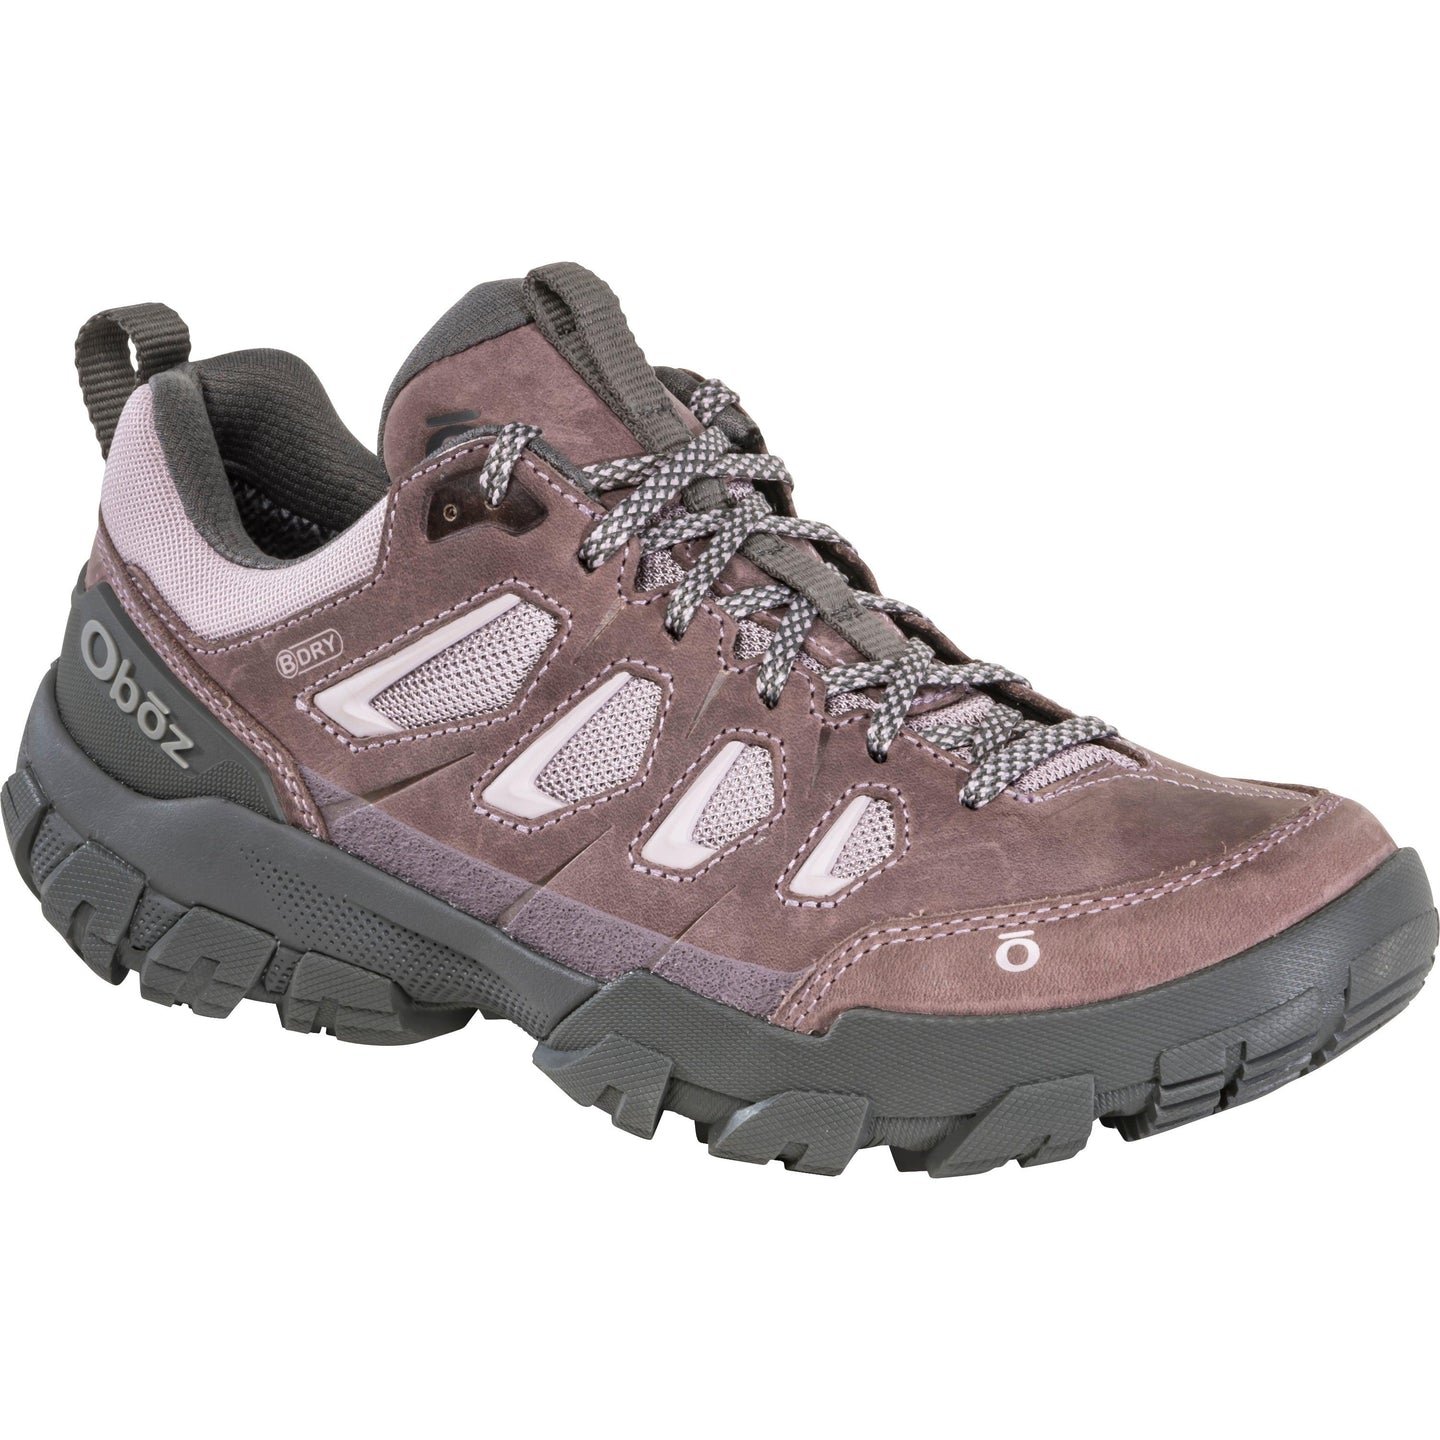 Women's Sawtooth X Low Waterproof - Oboz - Karavel Shoes - karavelshoes.com